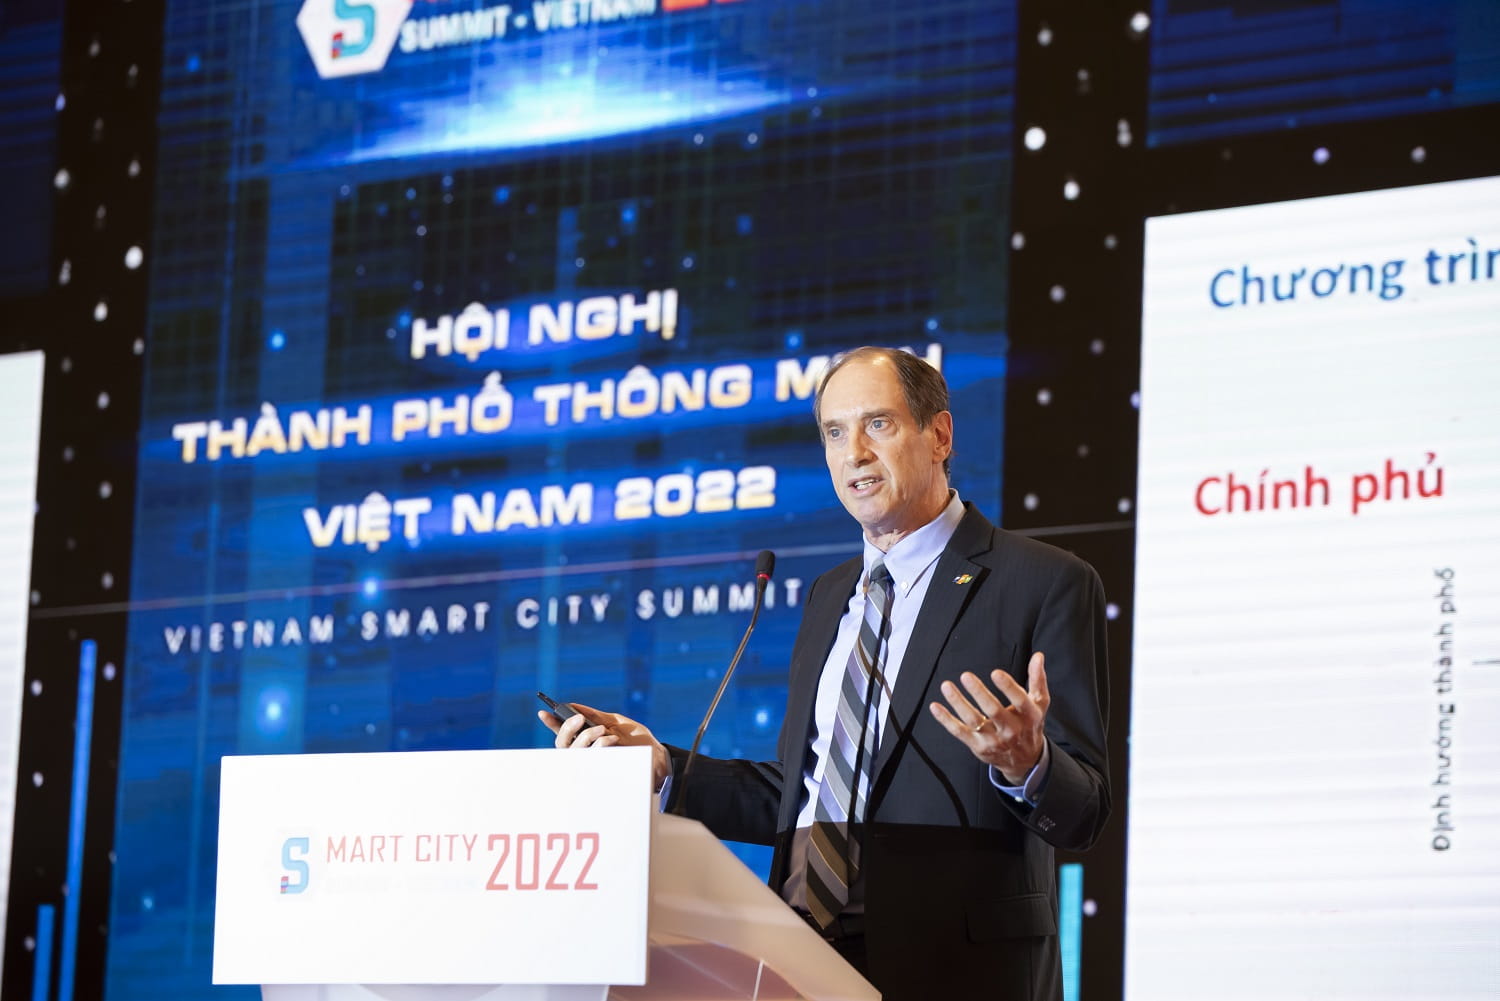 Smart ctity summit 2022